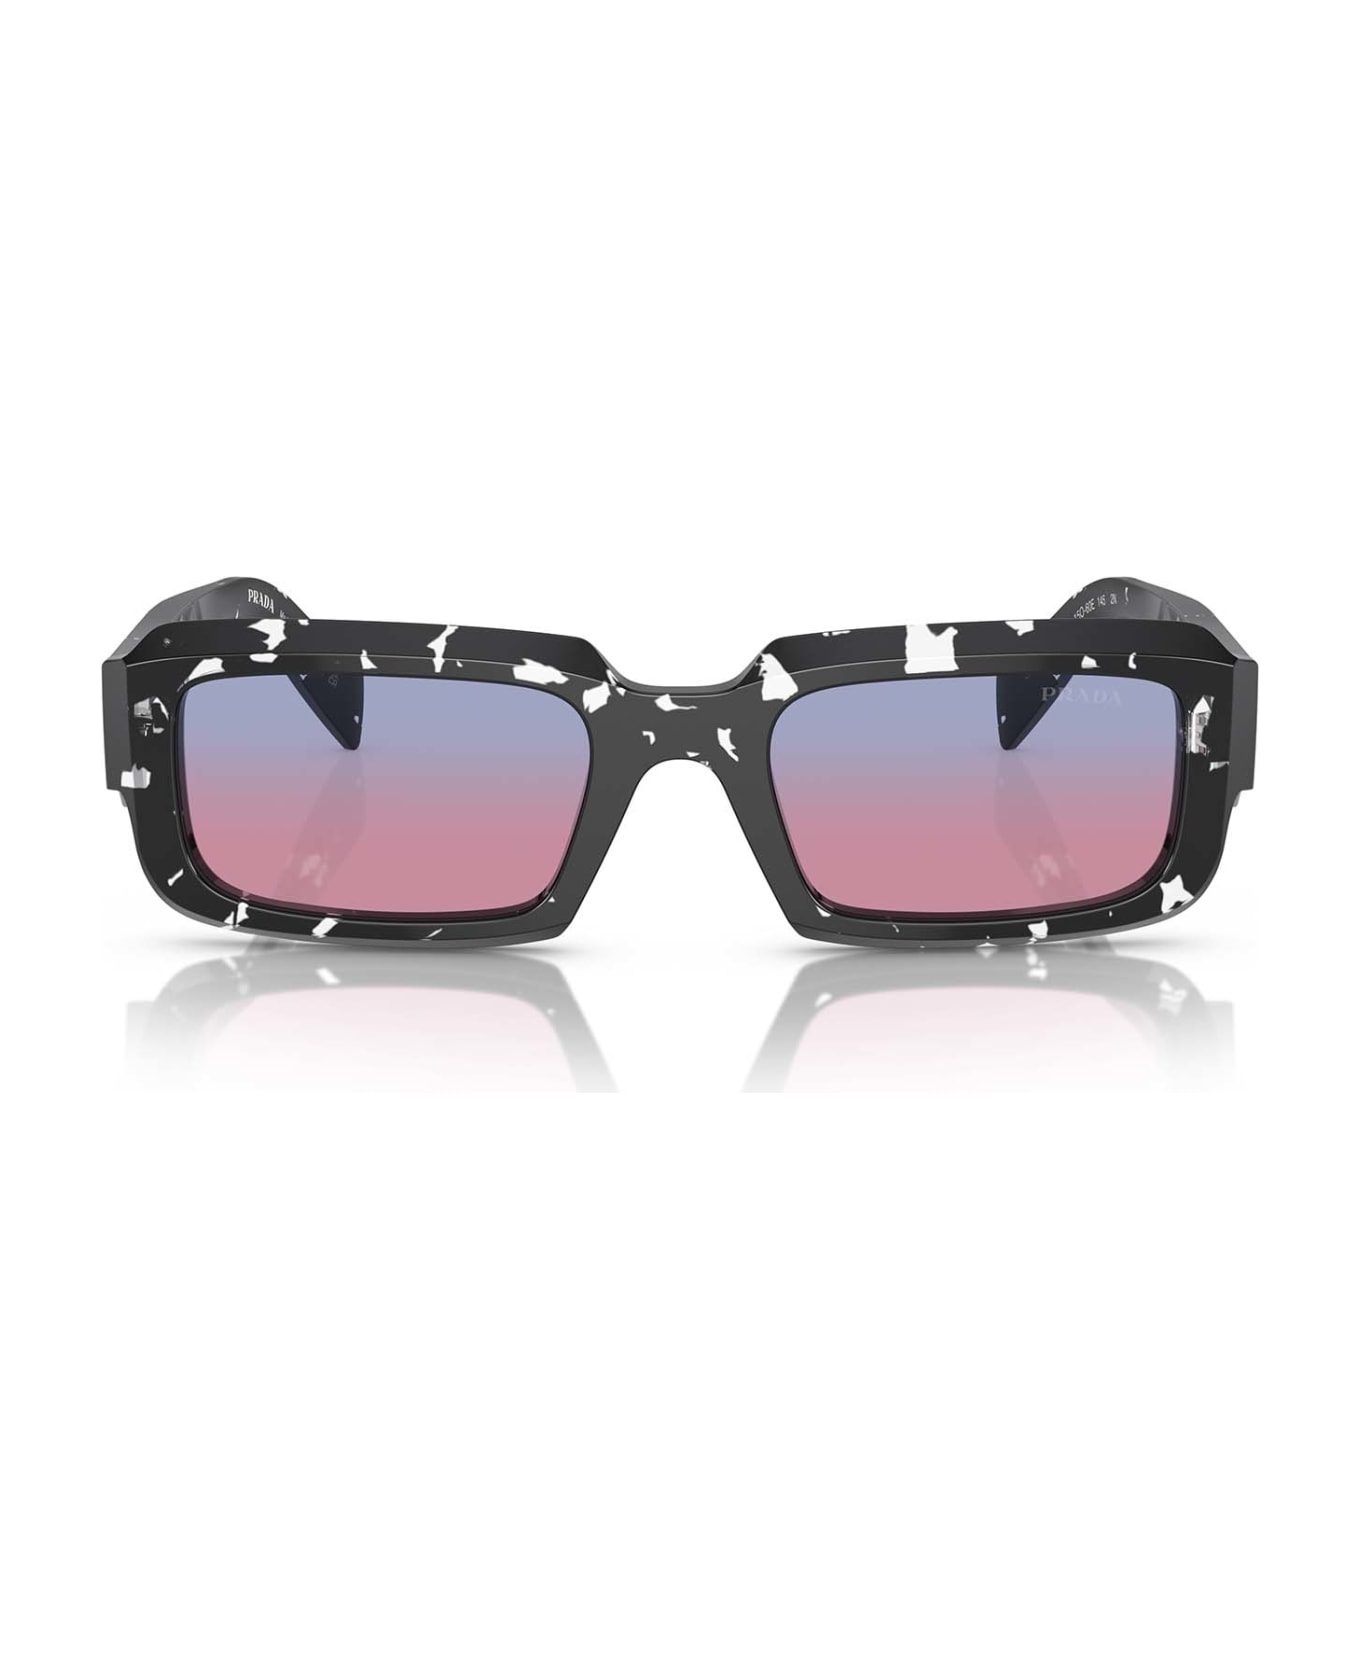 Prada Eyewear Pr 27zs Black Crystal Tortoise Sunglasses - Black Crystal Tortoise